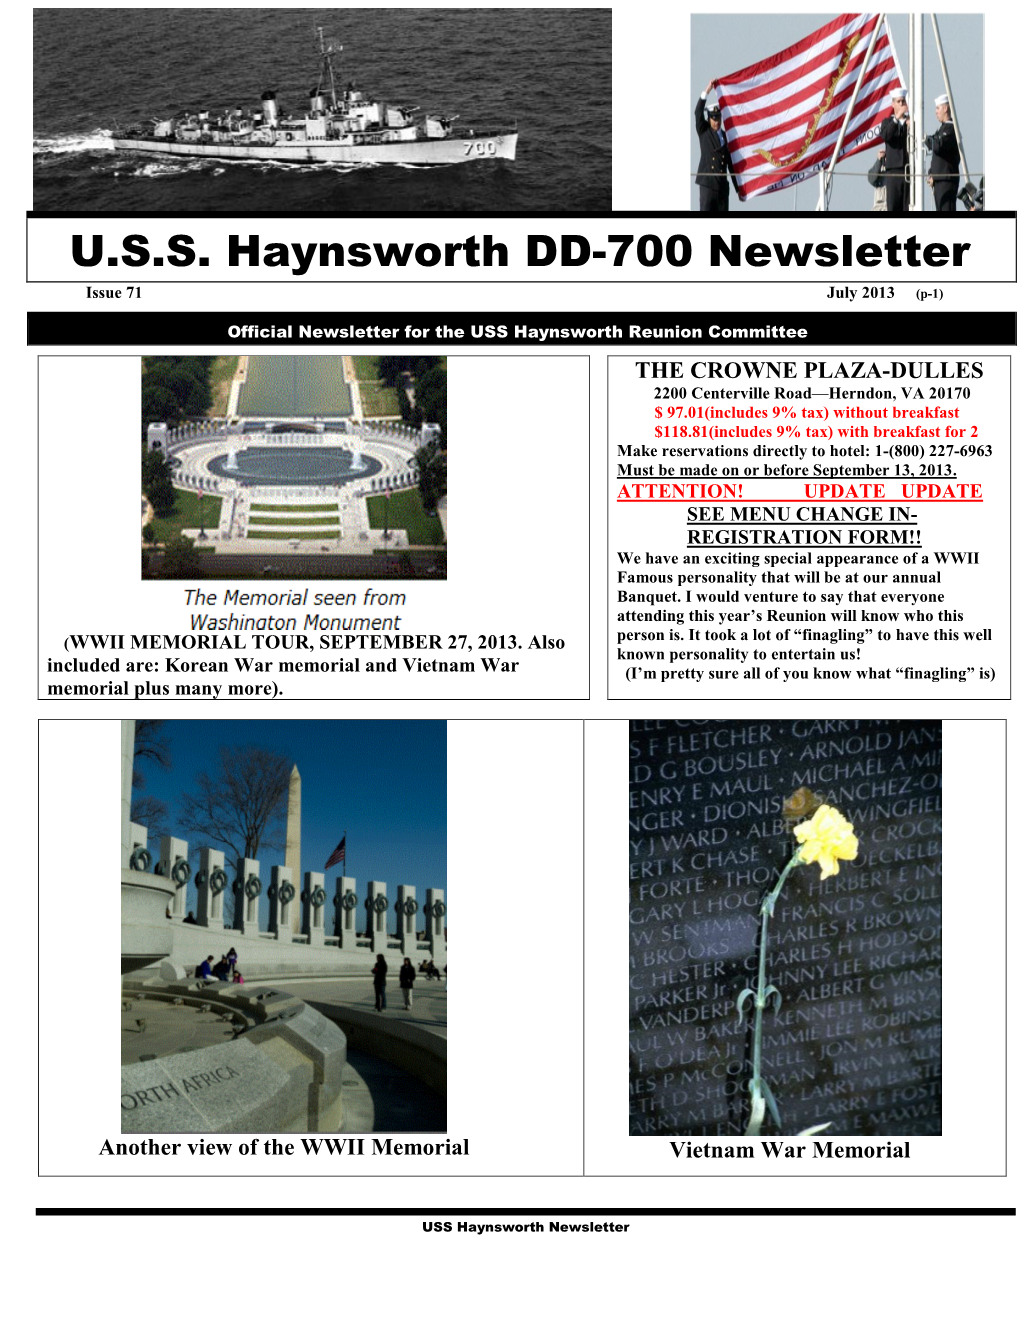 U.S.S. Haynsworth DD-700 Newsletter Issue 71 July 2013 (P-1)